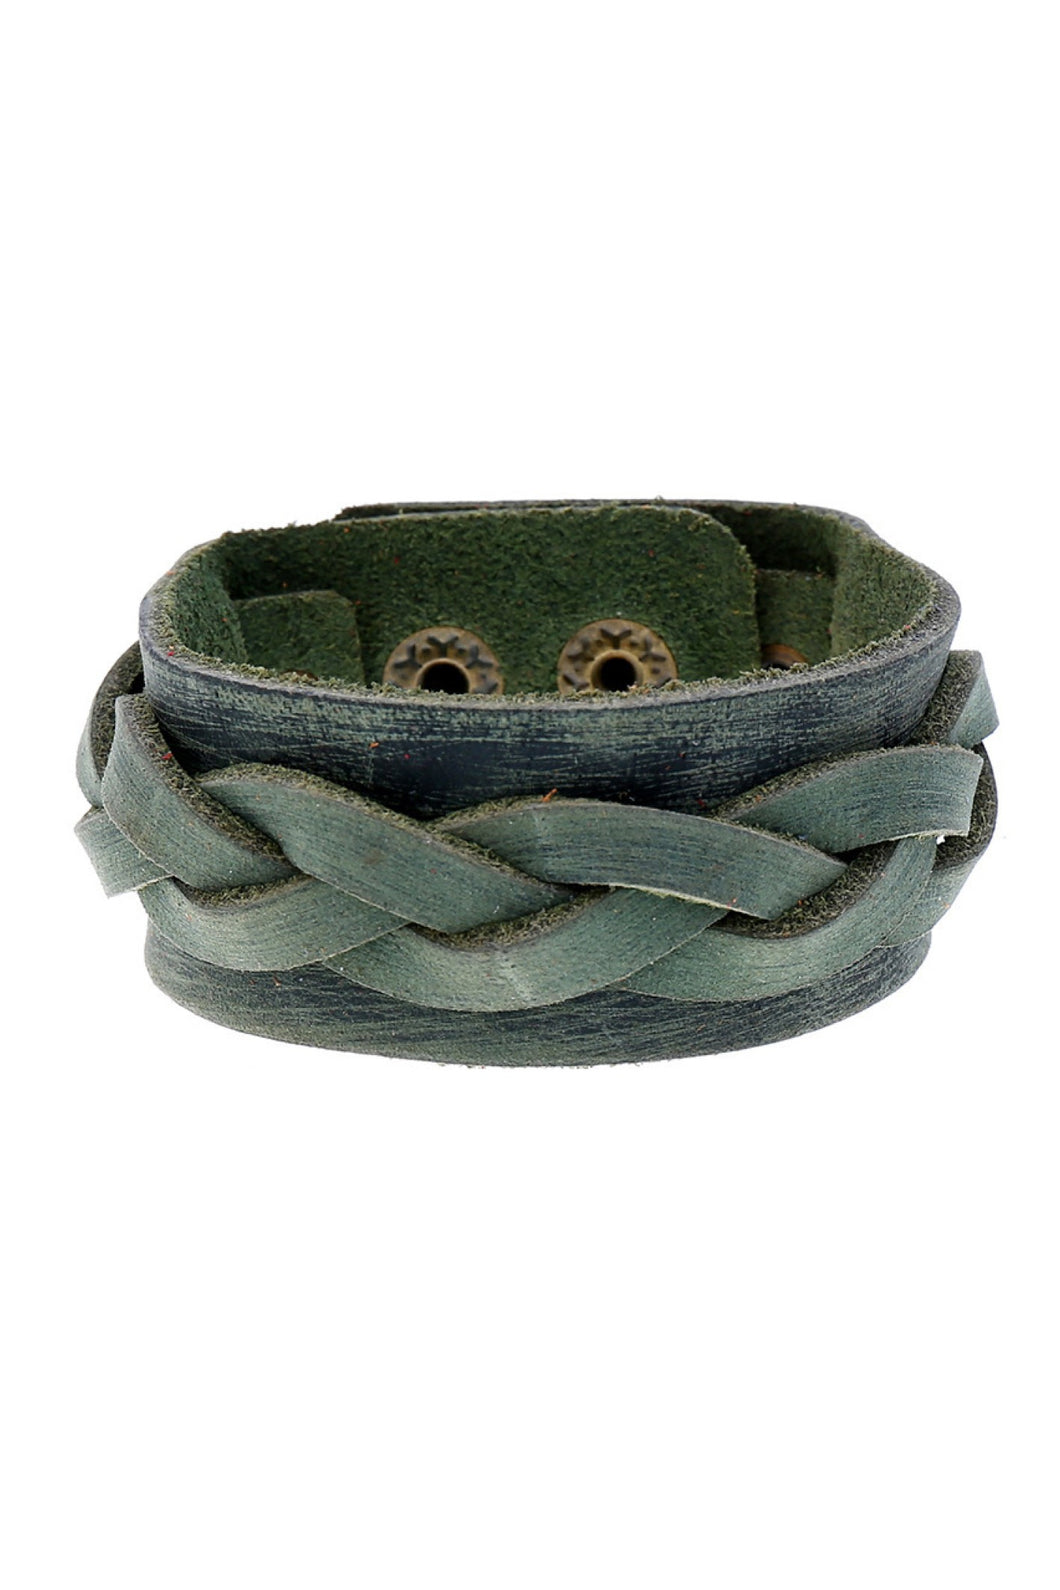 Olive Leather Bracelet